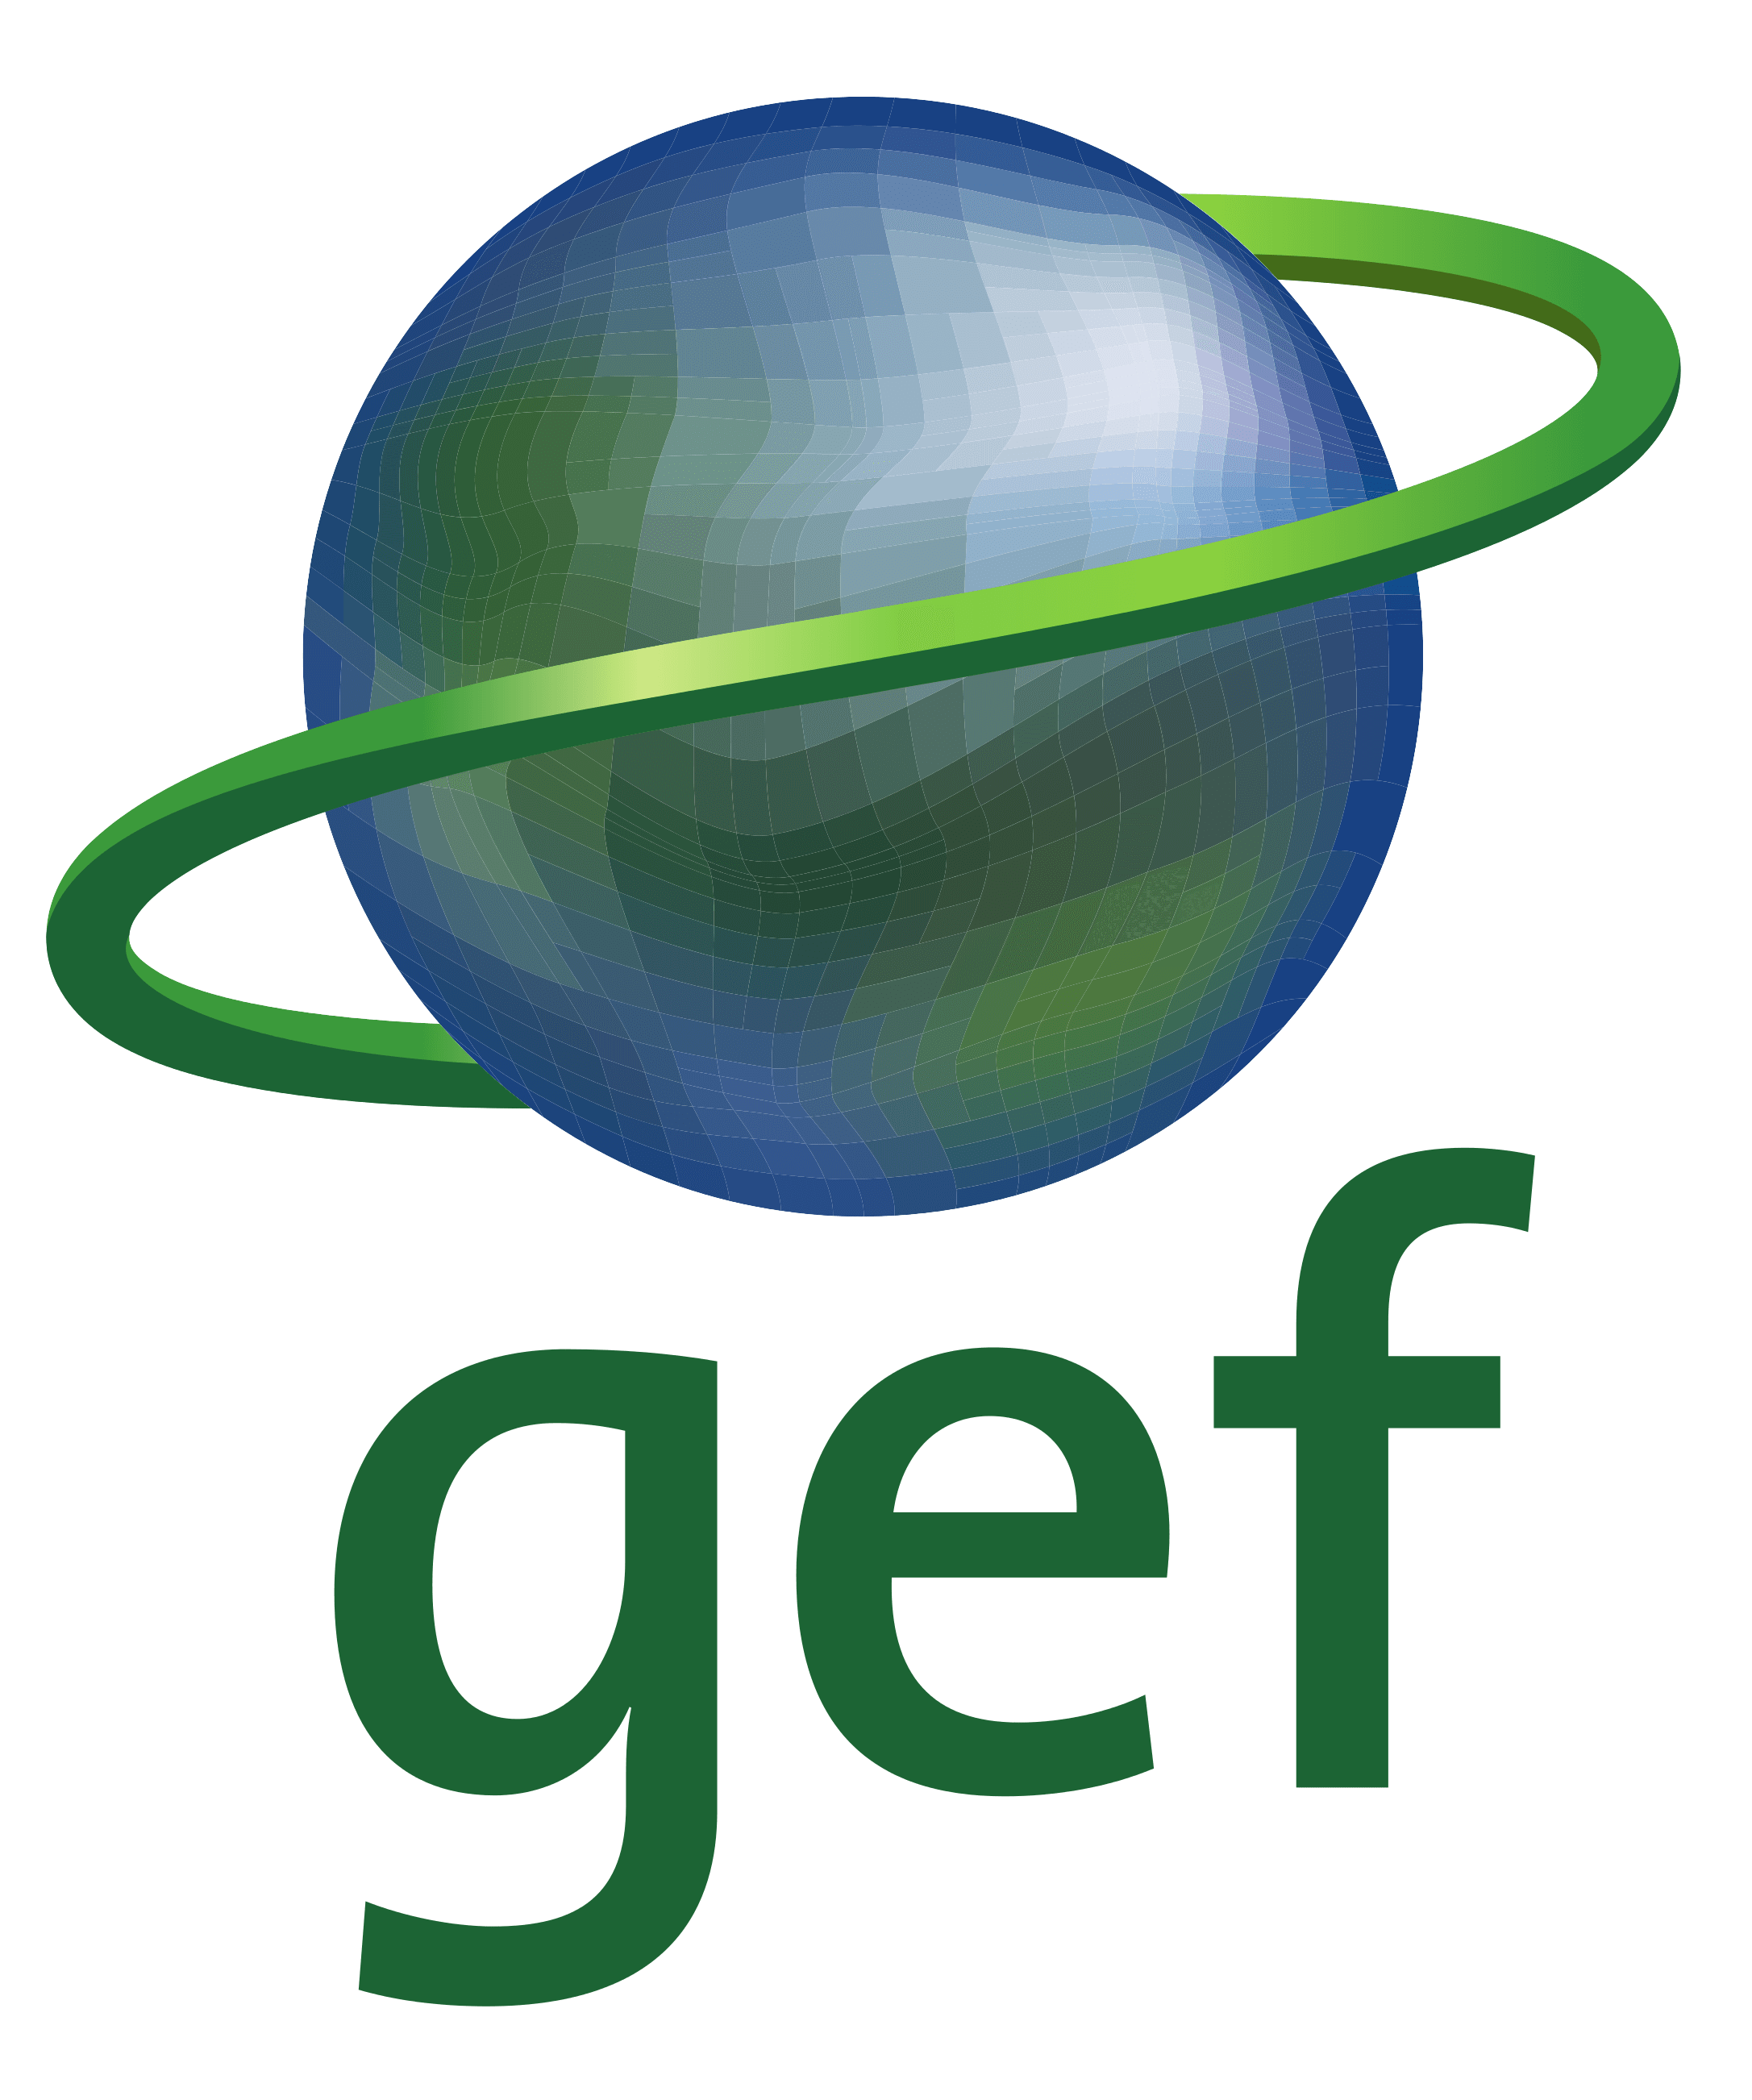 GEF (Global Environment Facility) logo, logotype